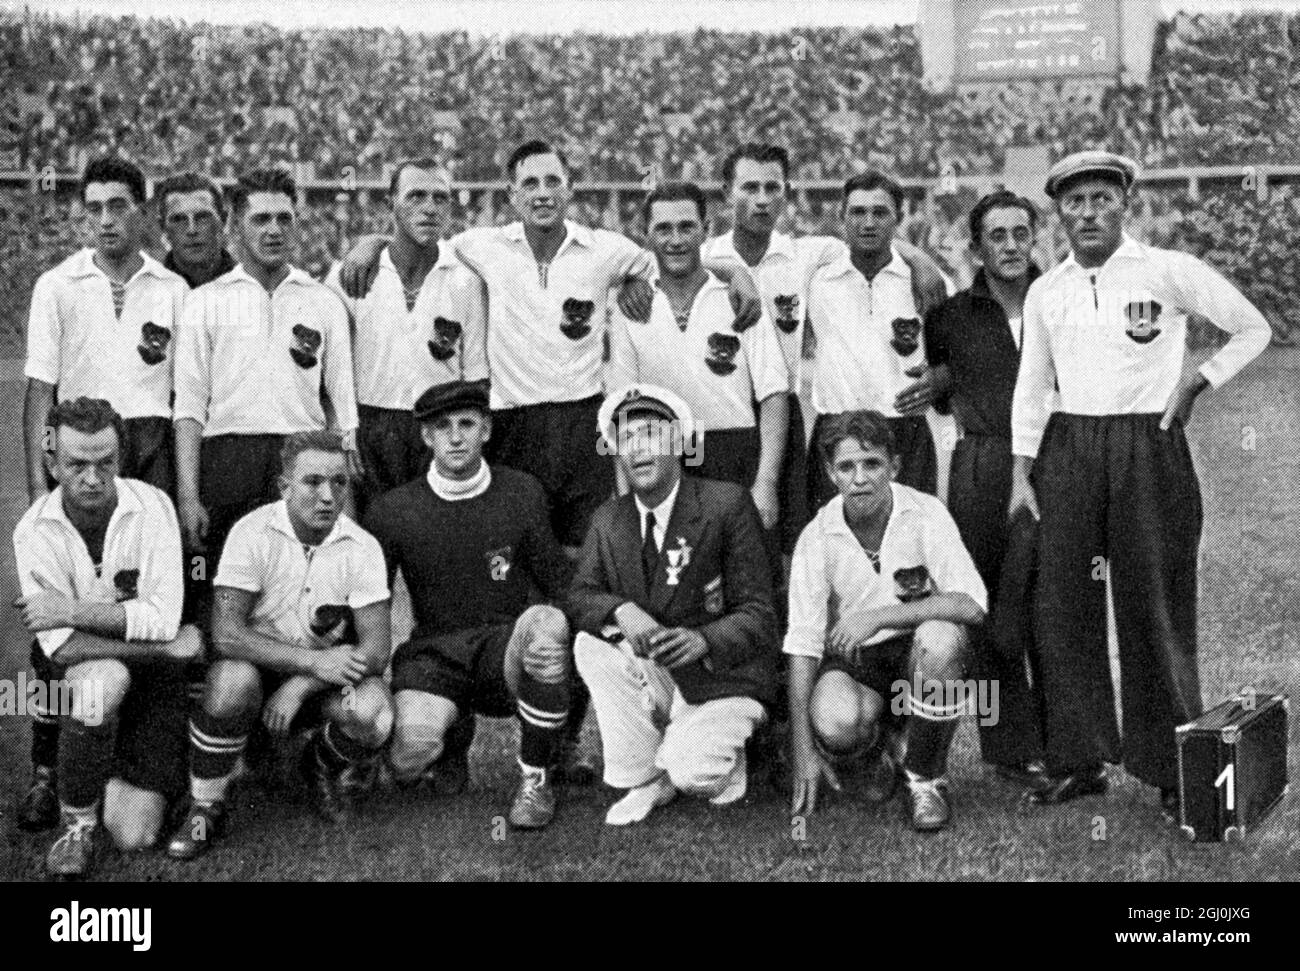 Jeux olympiques de 1936, Berlin - équipes de football du monde entier - Autriche. Füsslmannschaften aus aller Welt - Ostereich ©TopFoto Banque D'Images